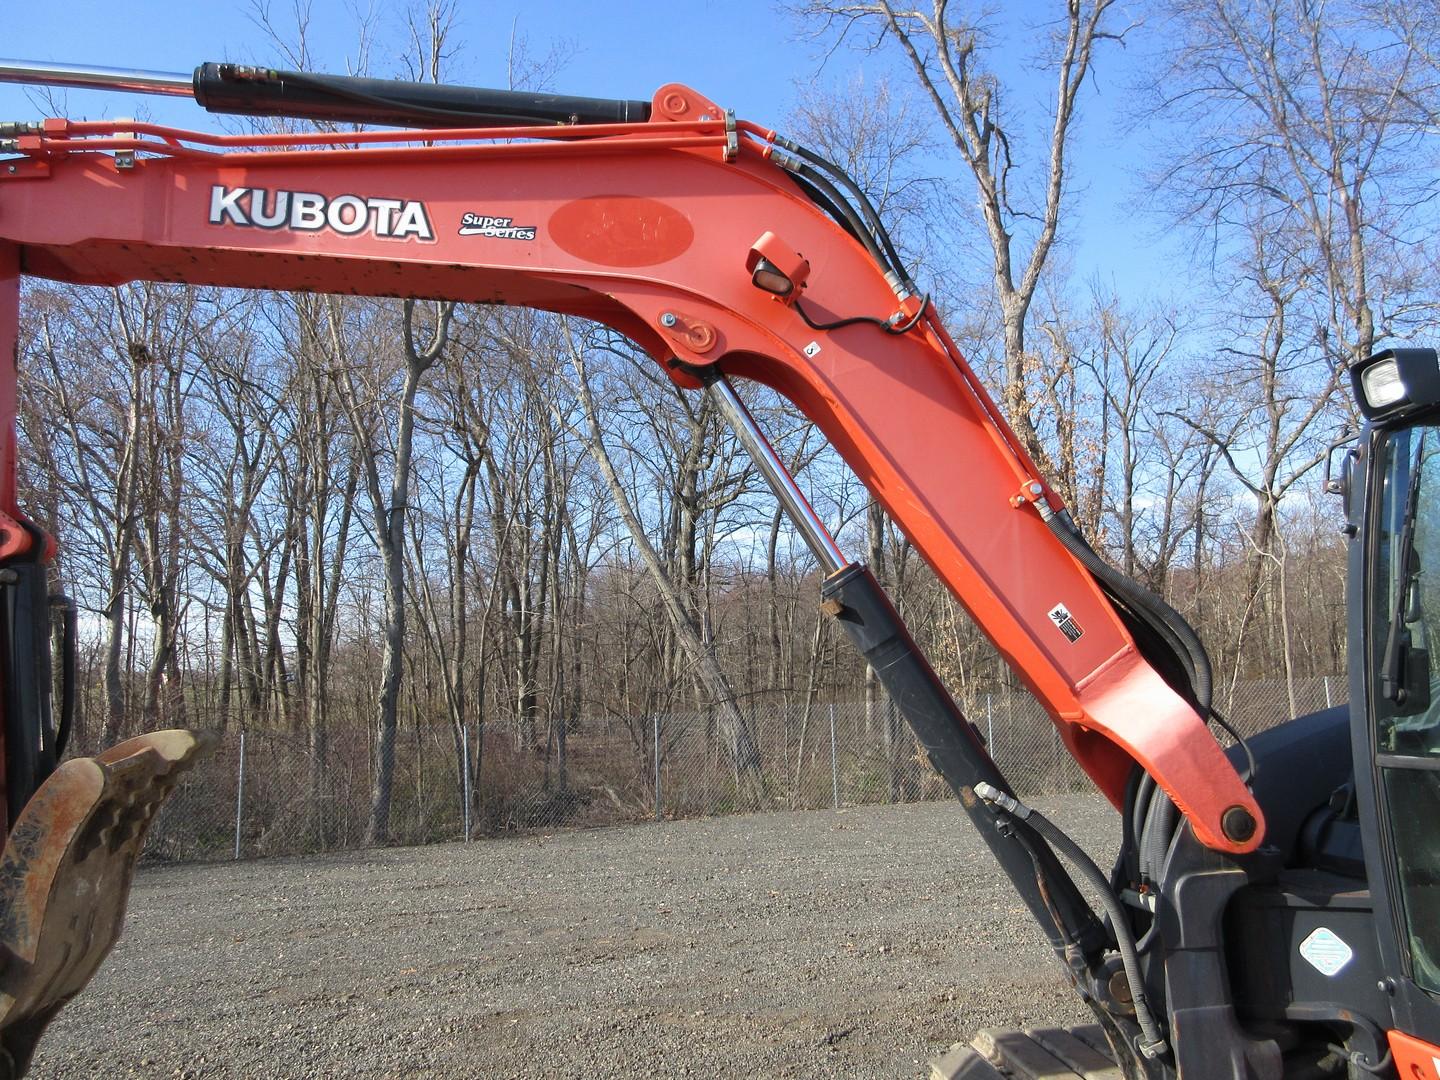 2018 Kubota KX080-4SS Hydraulic Excavator